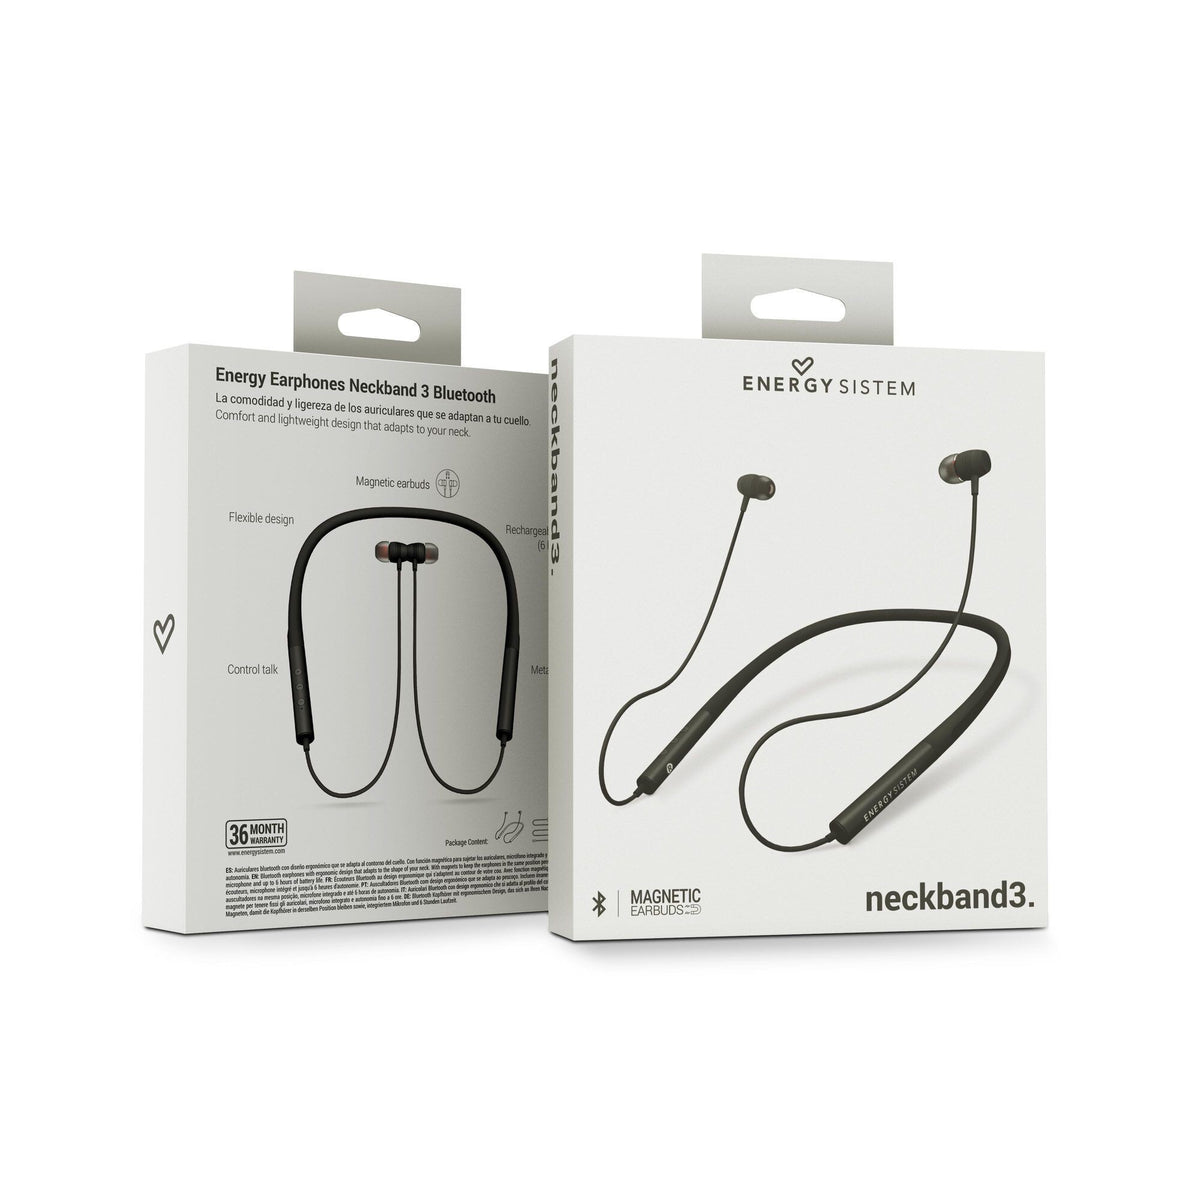 Bezdrôtové slúchadlá ENERGY Earphones Neckband 3 Bluetooth, čier